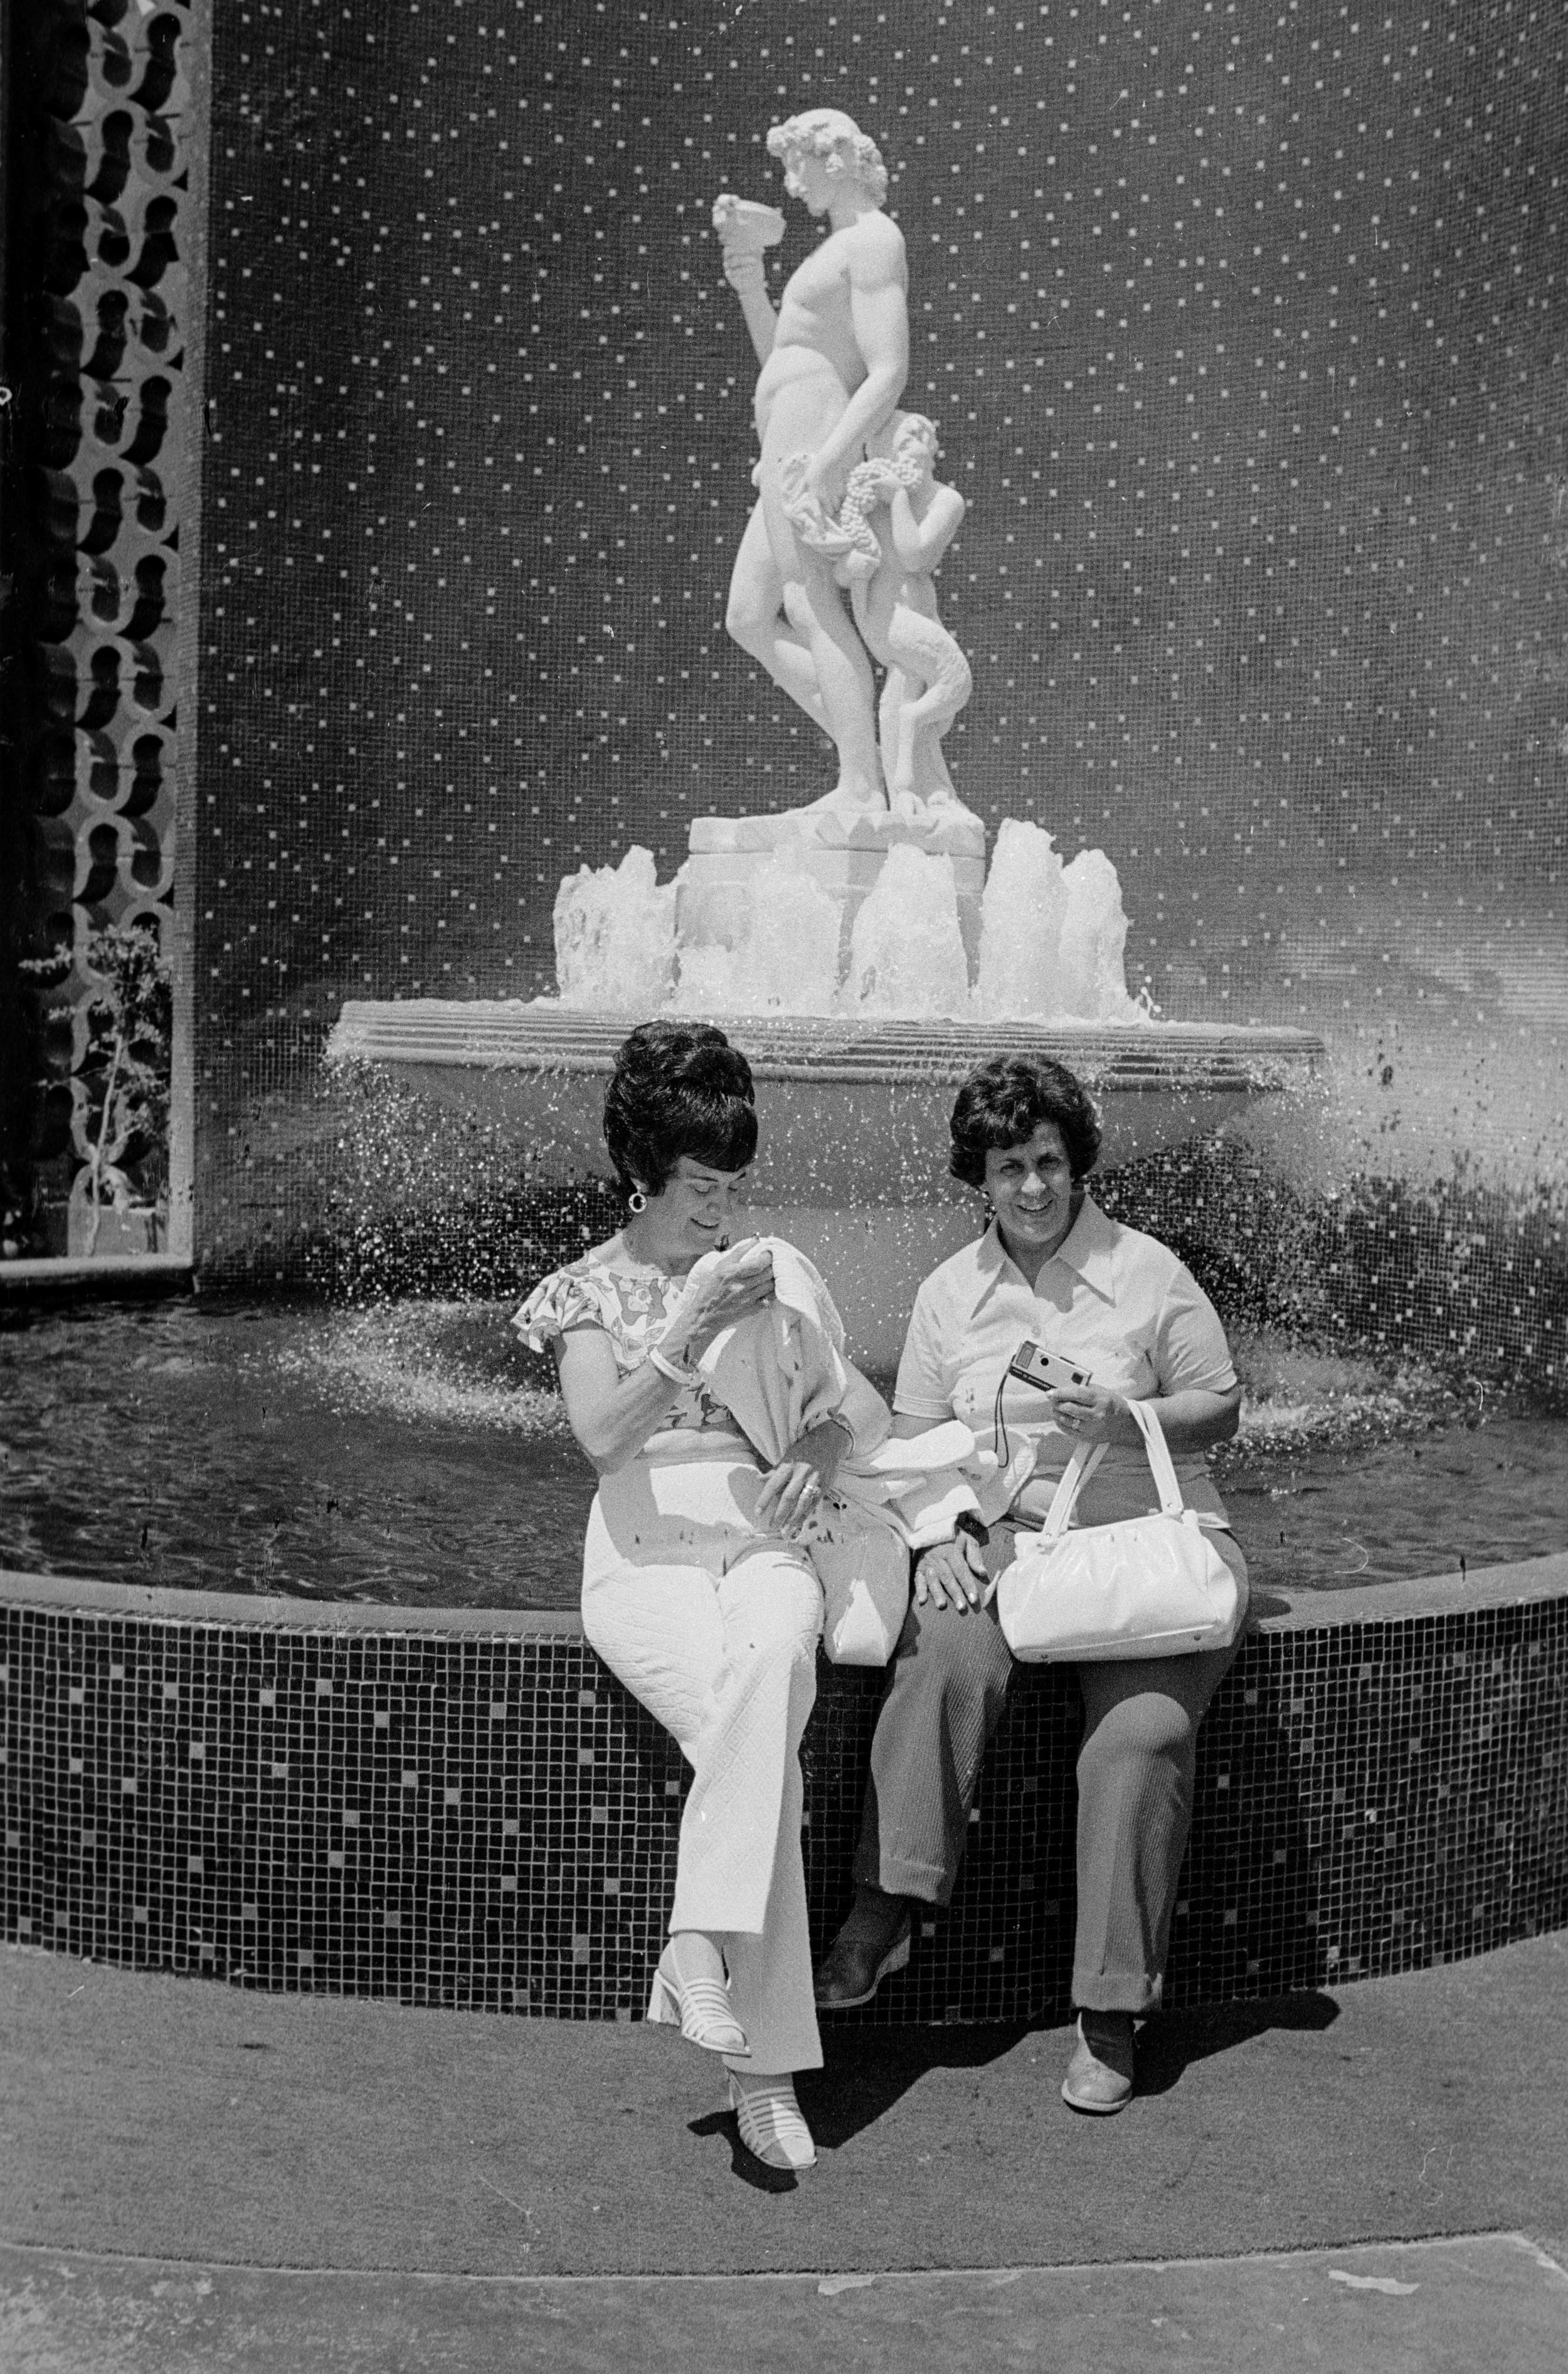   Las Vegas, NV, 1975  